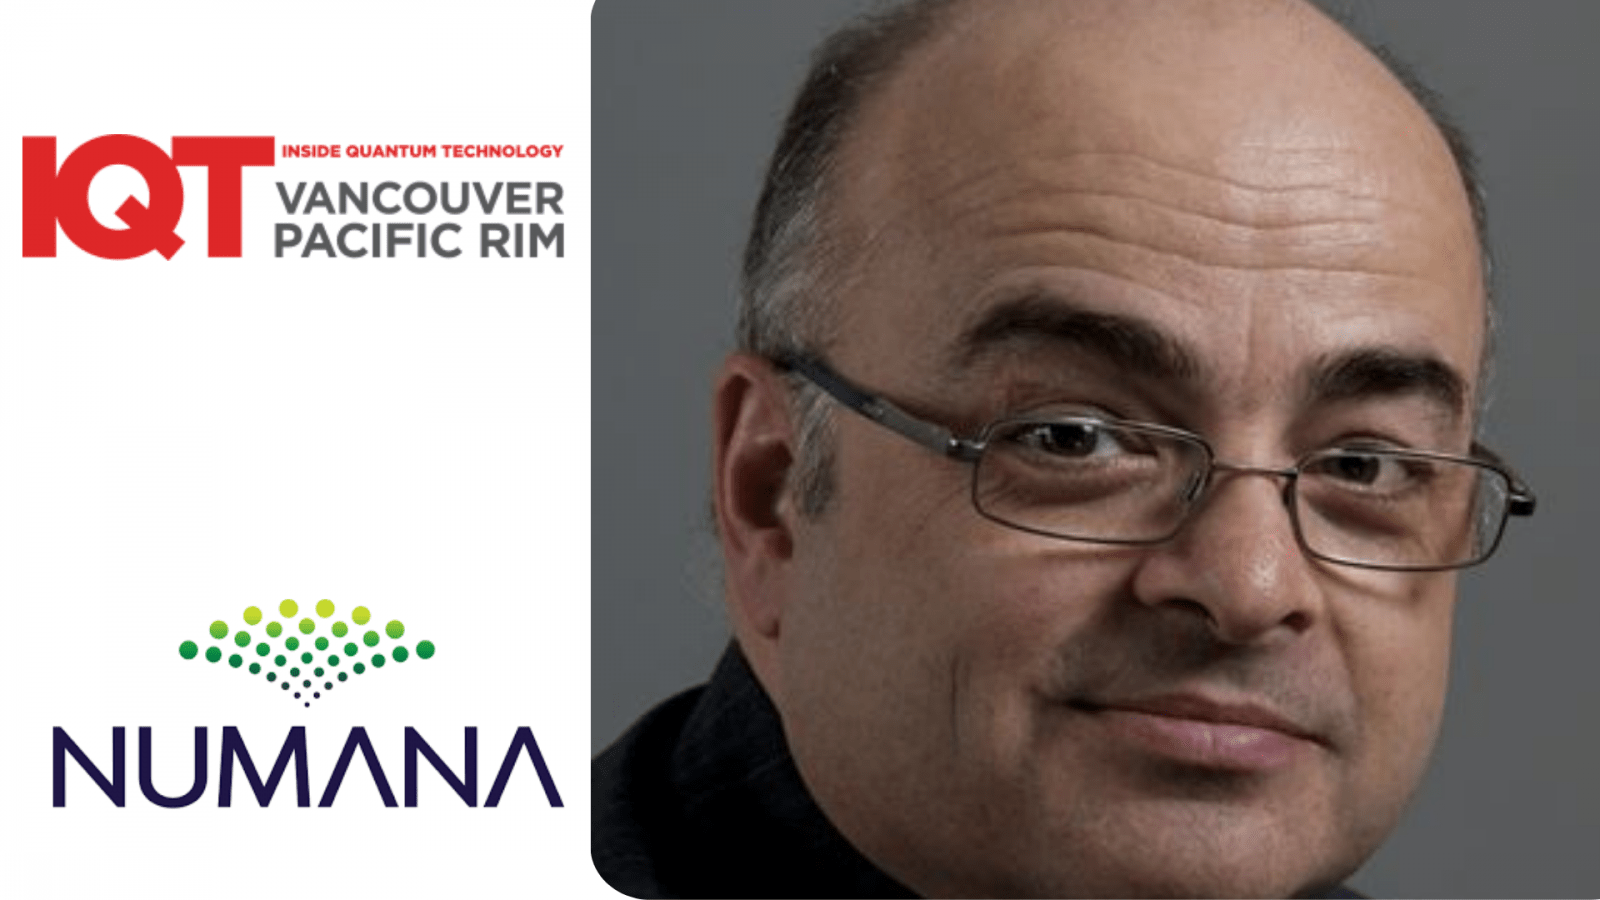 Jacques Mc Neill, Quantum Communication Initiative Coordinator for Numana, is an IQT Vancouver/Pacific Rim conference speaker for the 2024 event